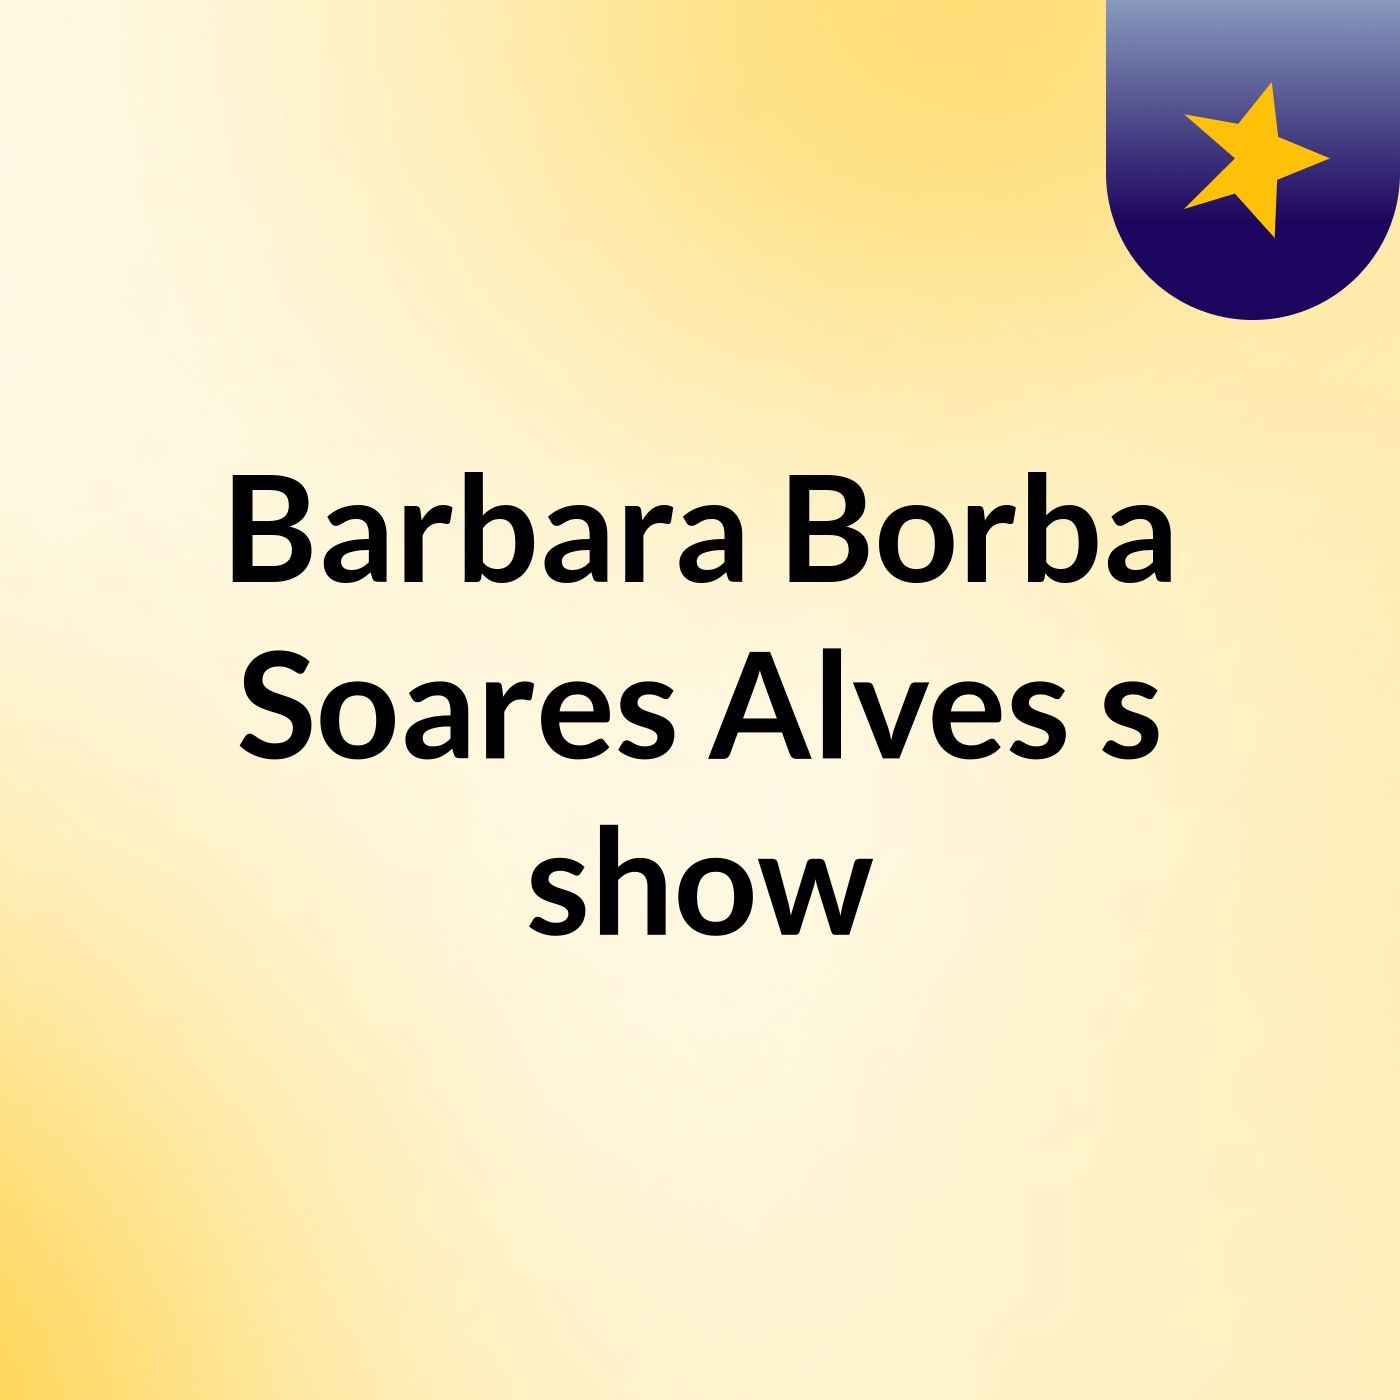 Barbara Borba Soares Alves's show